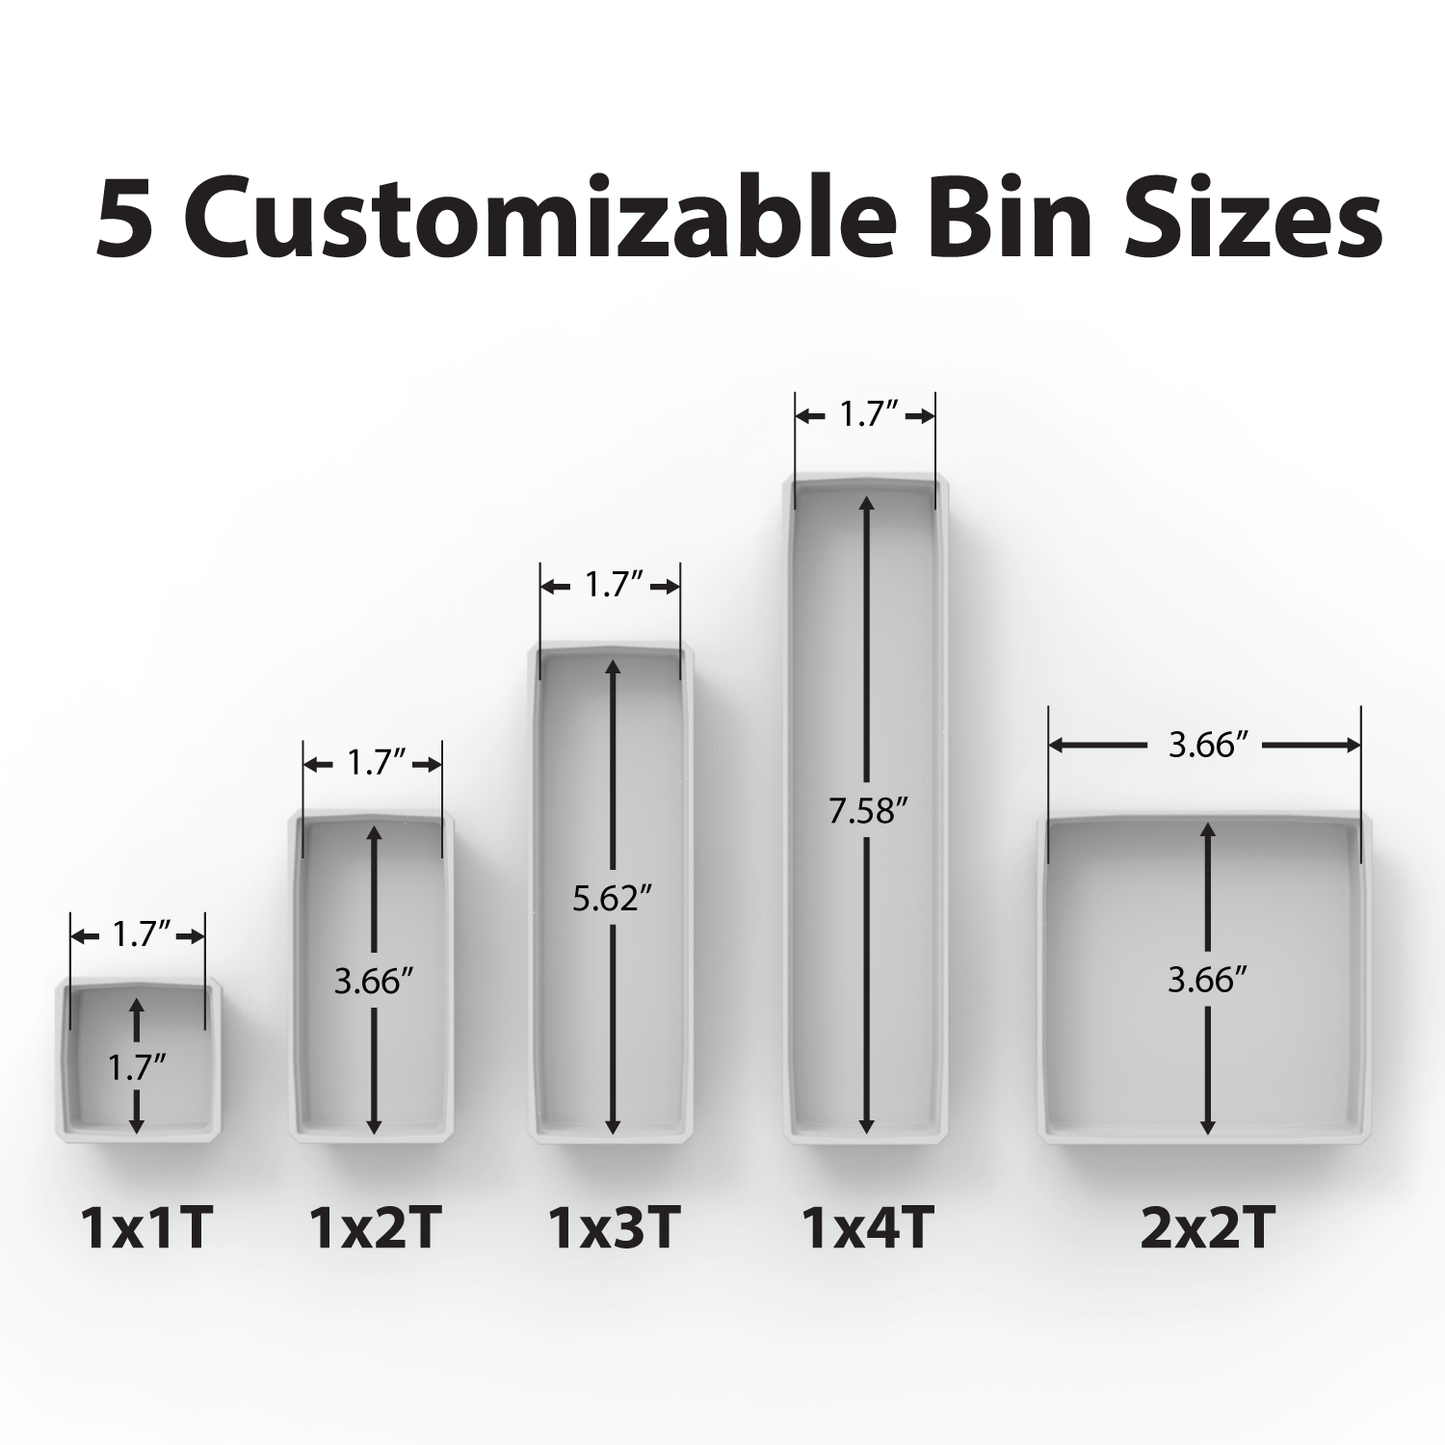 2 Customizable 1x4T (Thin) Bins